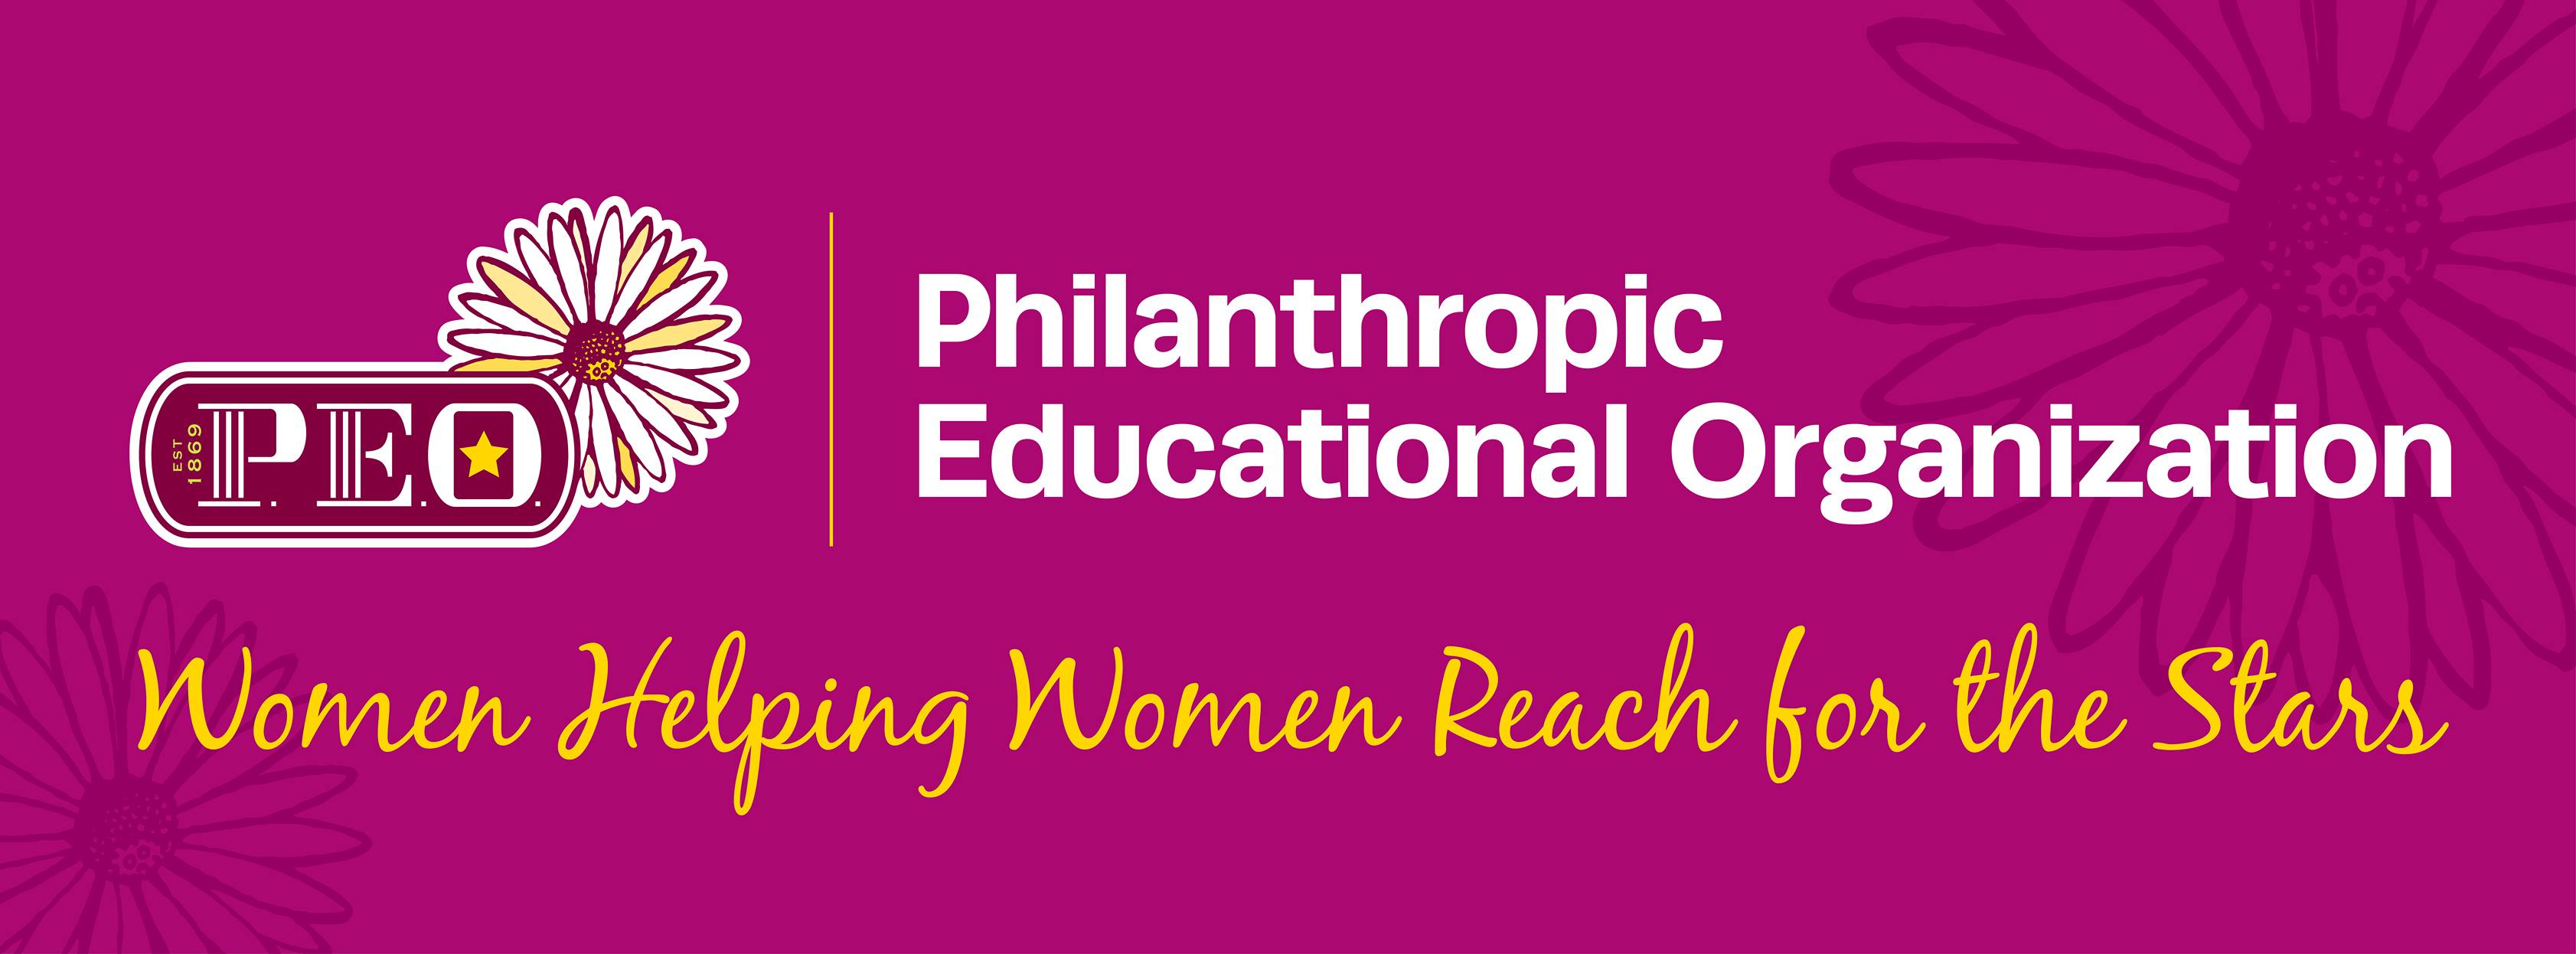 Philanthropic Educational Organization logo